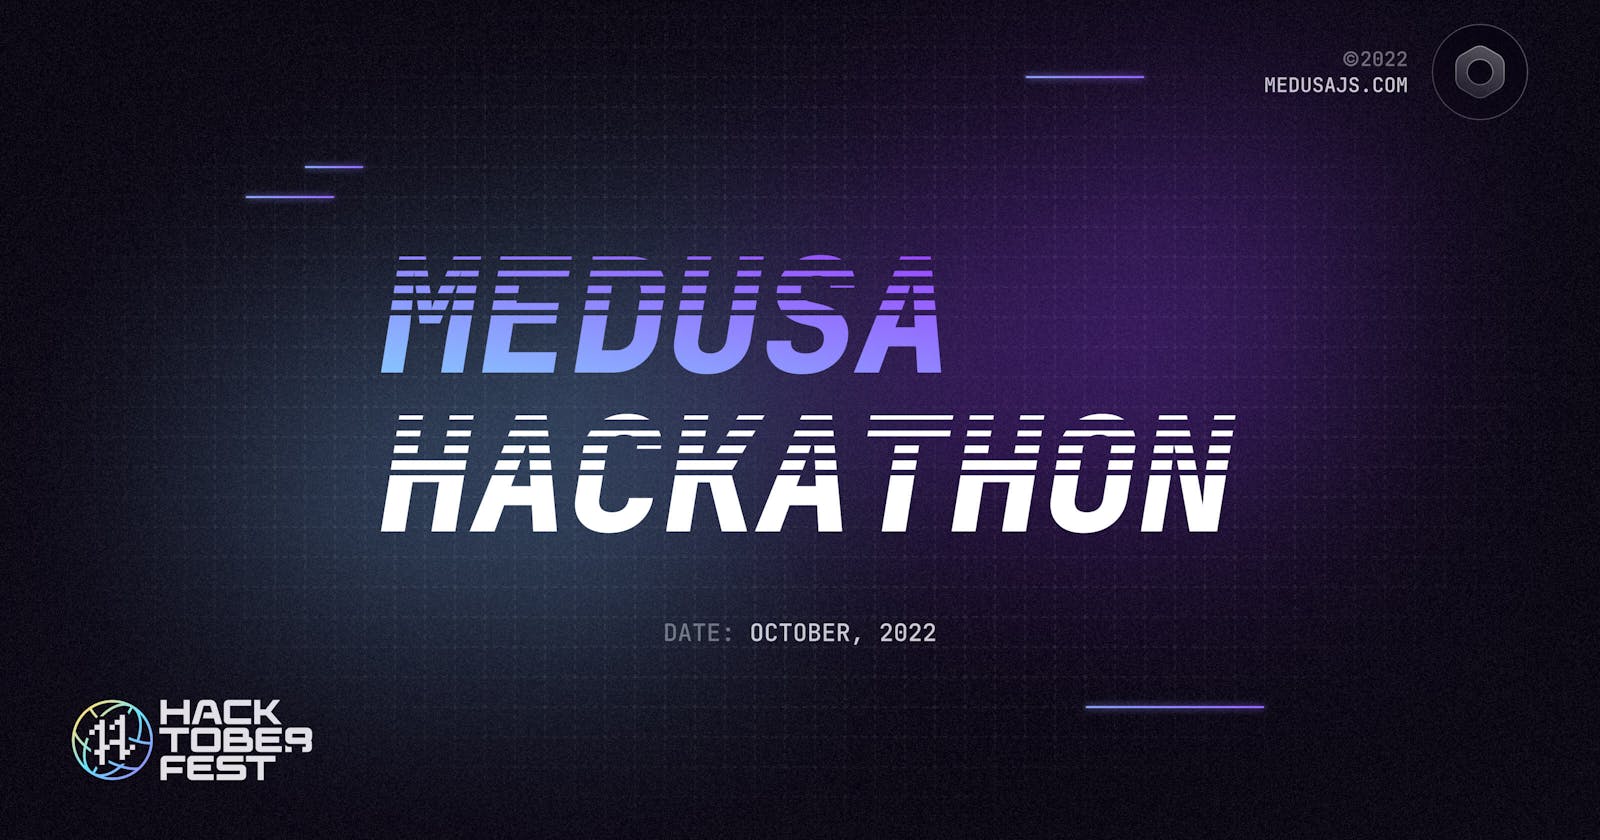 Medusa Hackathon 2022: Participation Tips and Guidelines